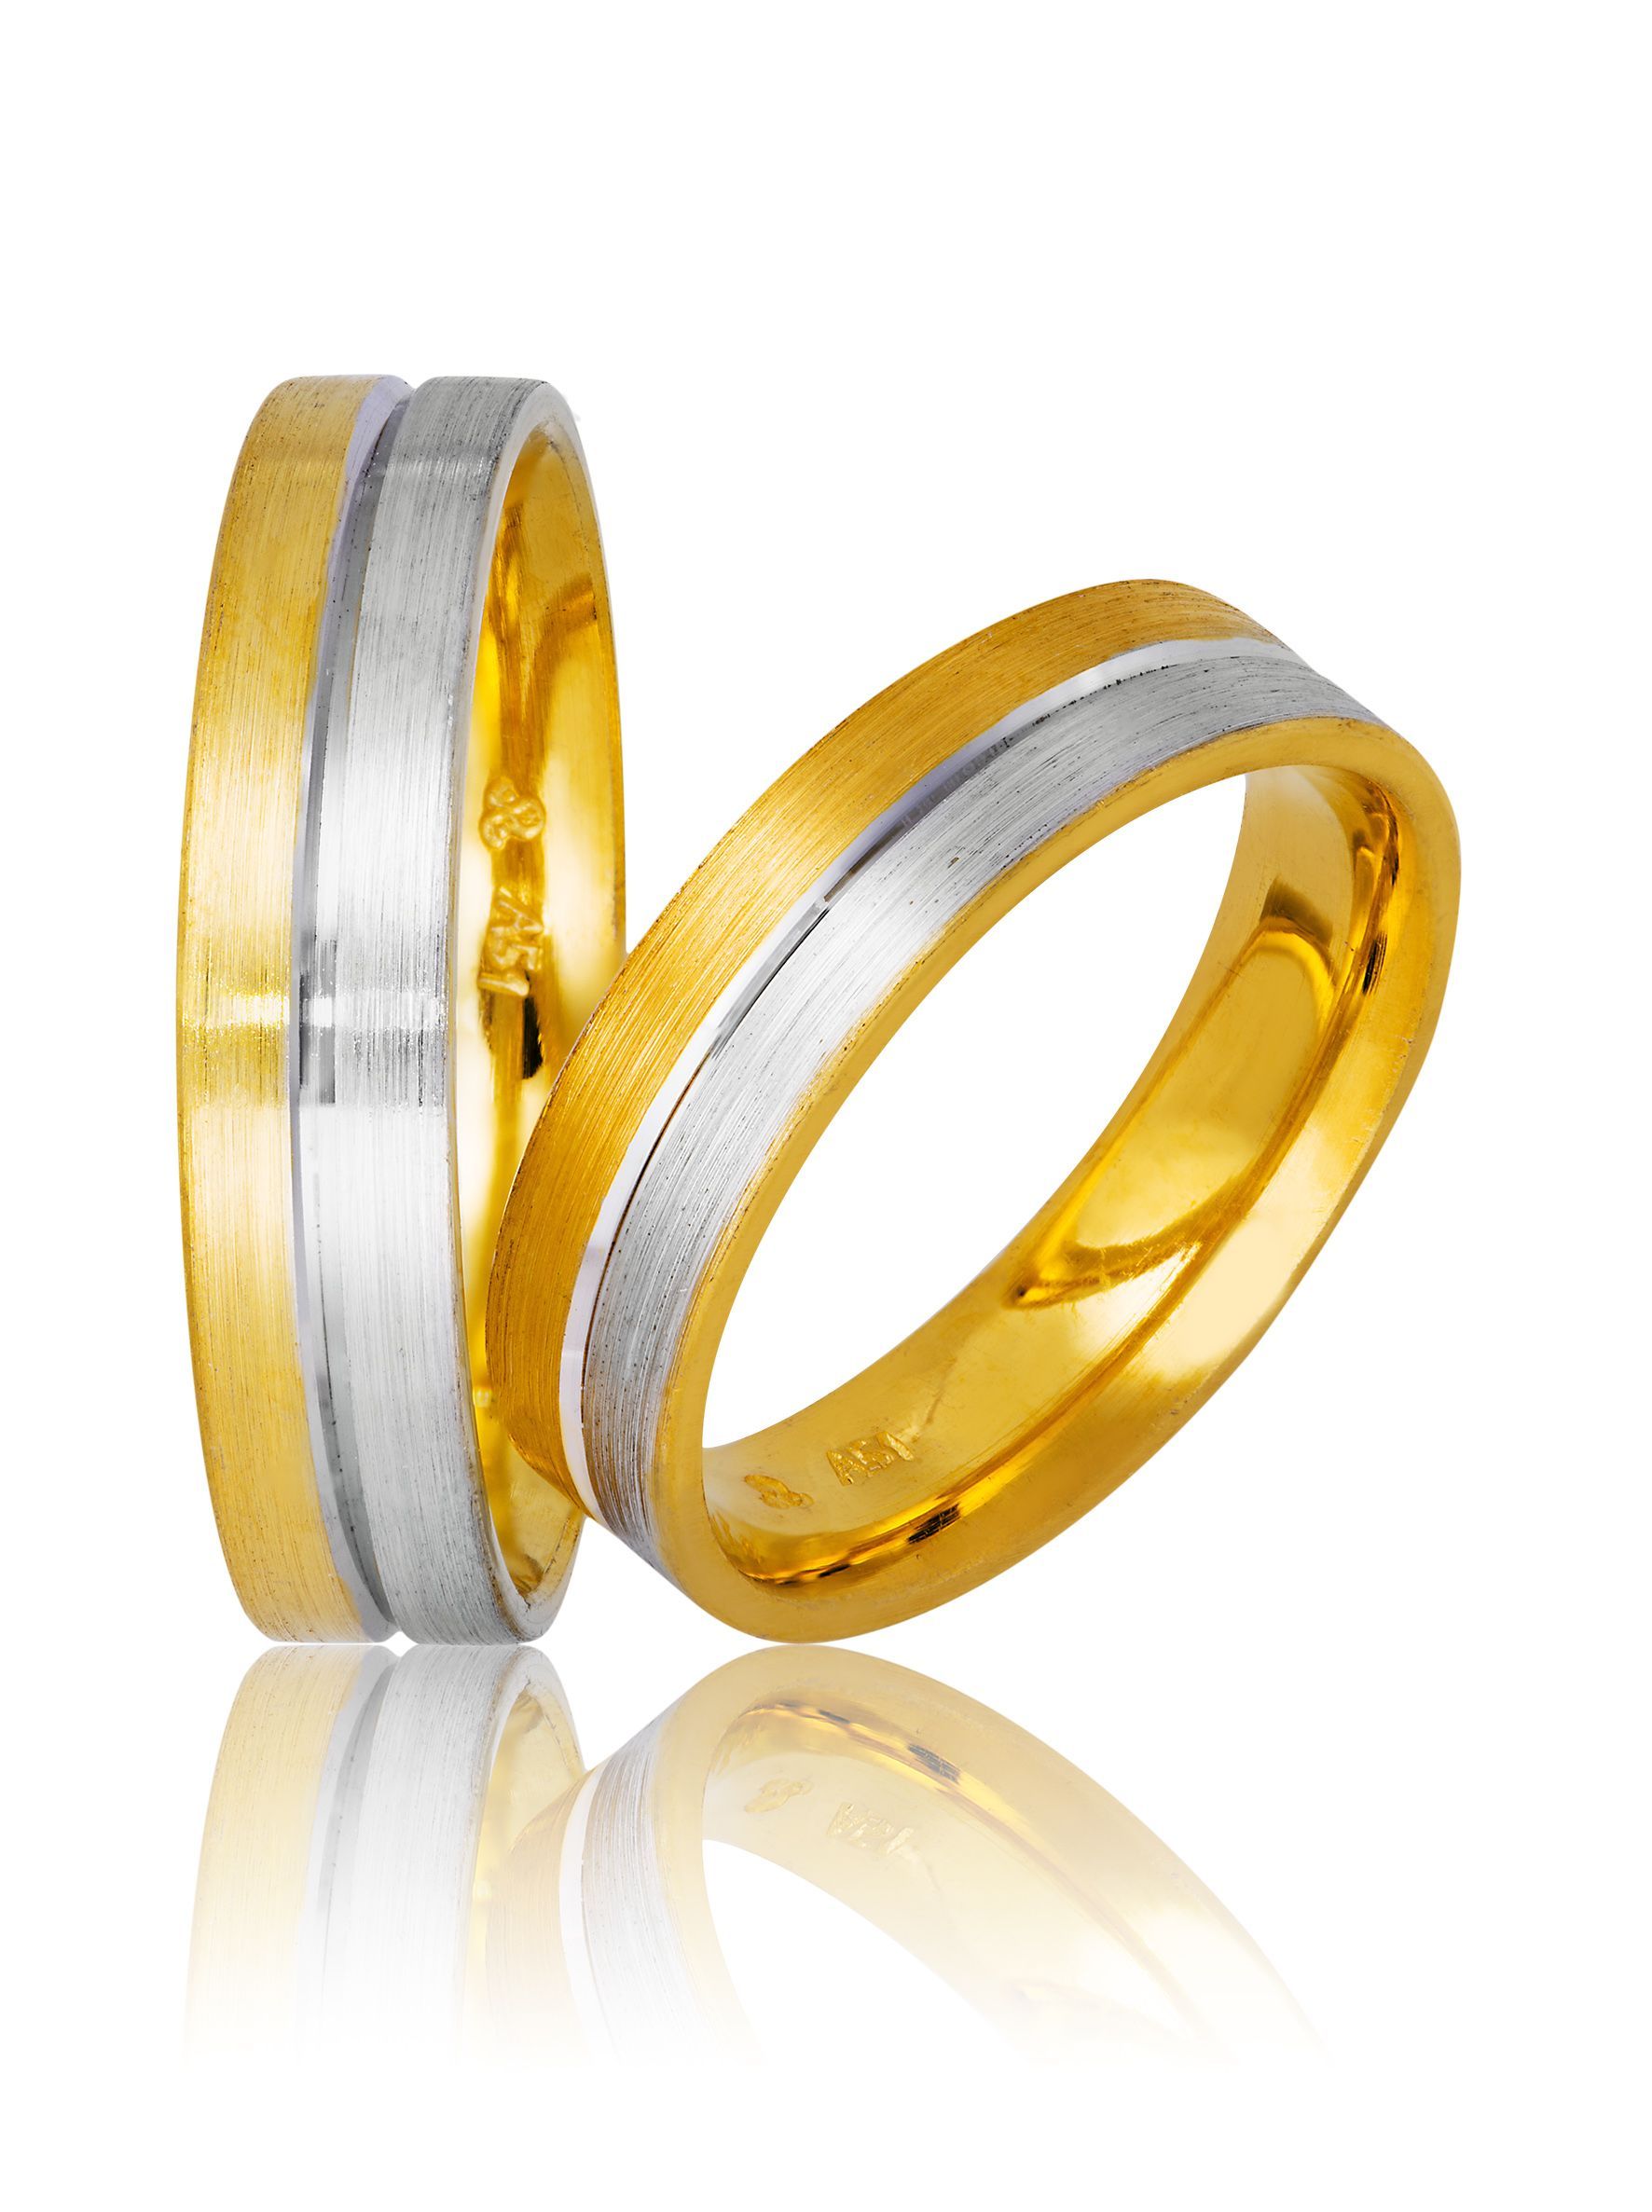 White gold & gold wedding rings 5mm (code 737)